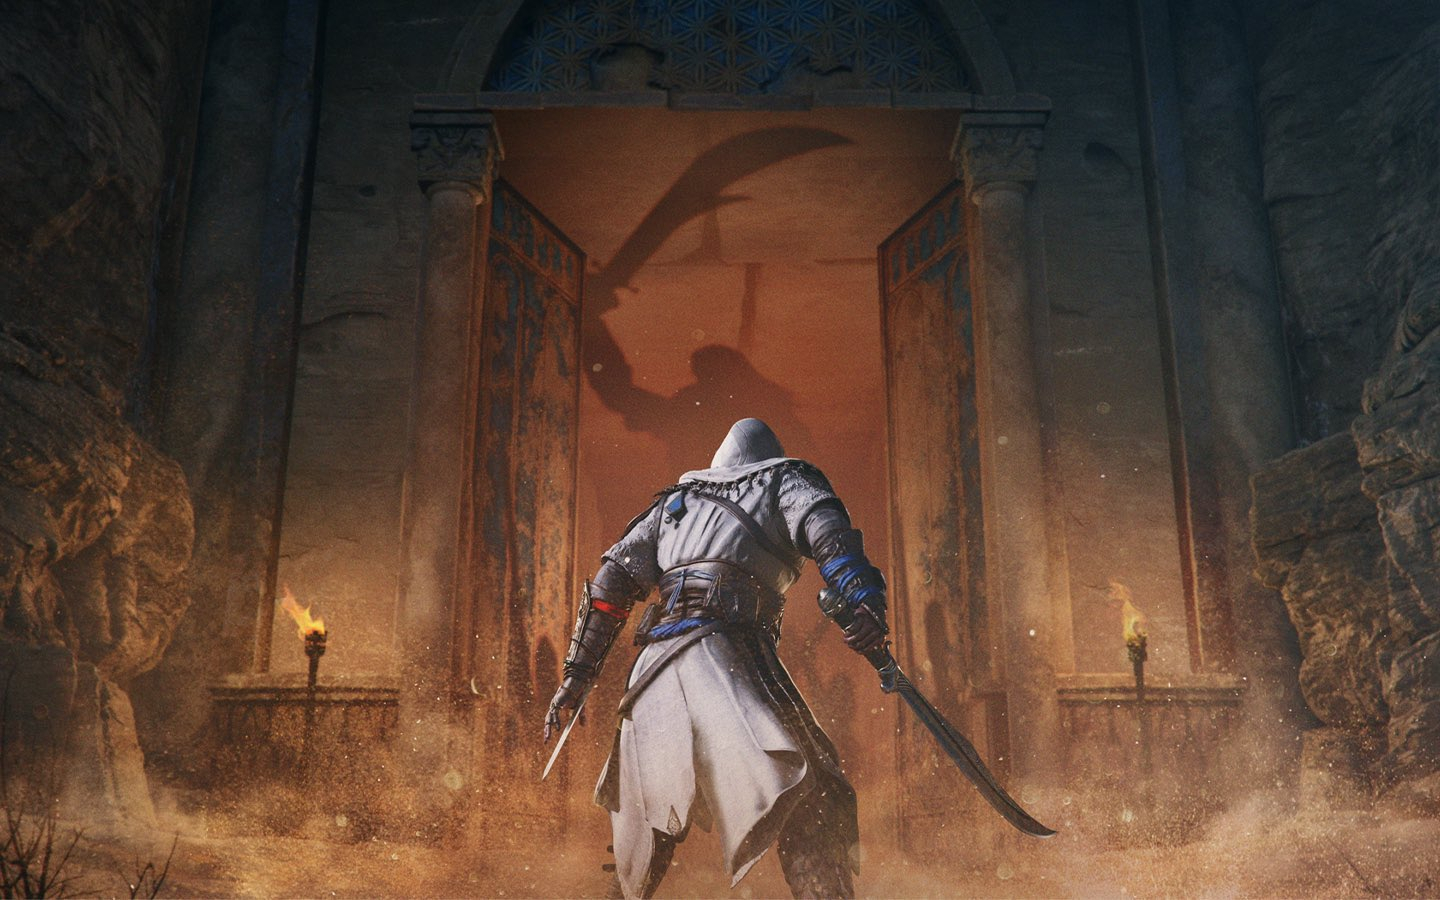 Релиз Assassin's Creed Mirage запланирован на 12 октября, согласно новой утечке: с сайта NEWXBOXONE.RU